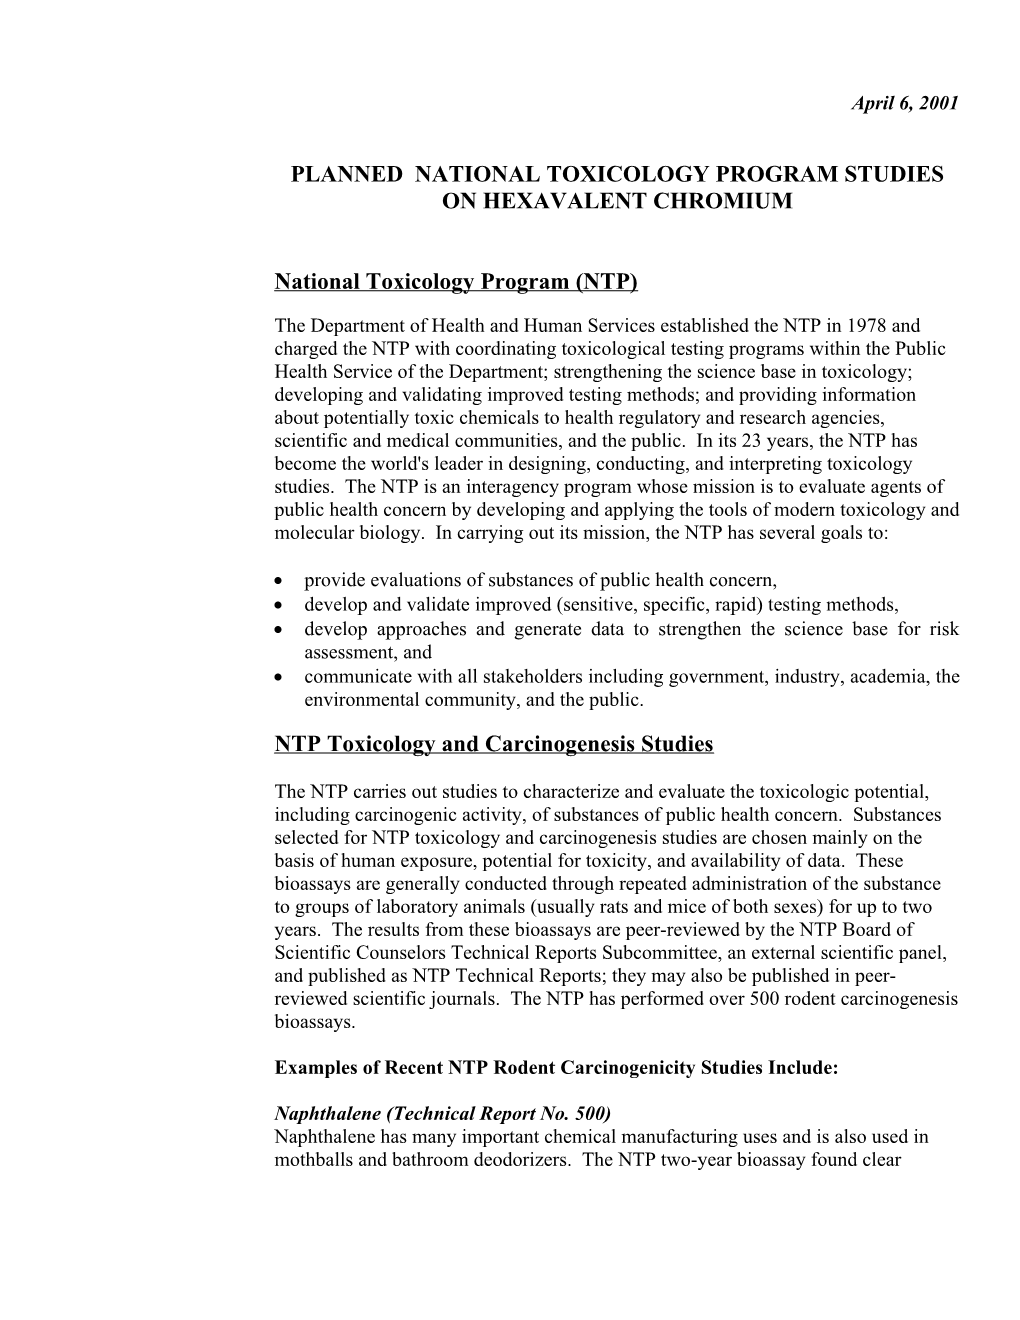 Planned National Toxicology Program (Ntp) Studies on Hexavalent Chromium